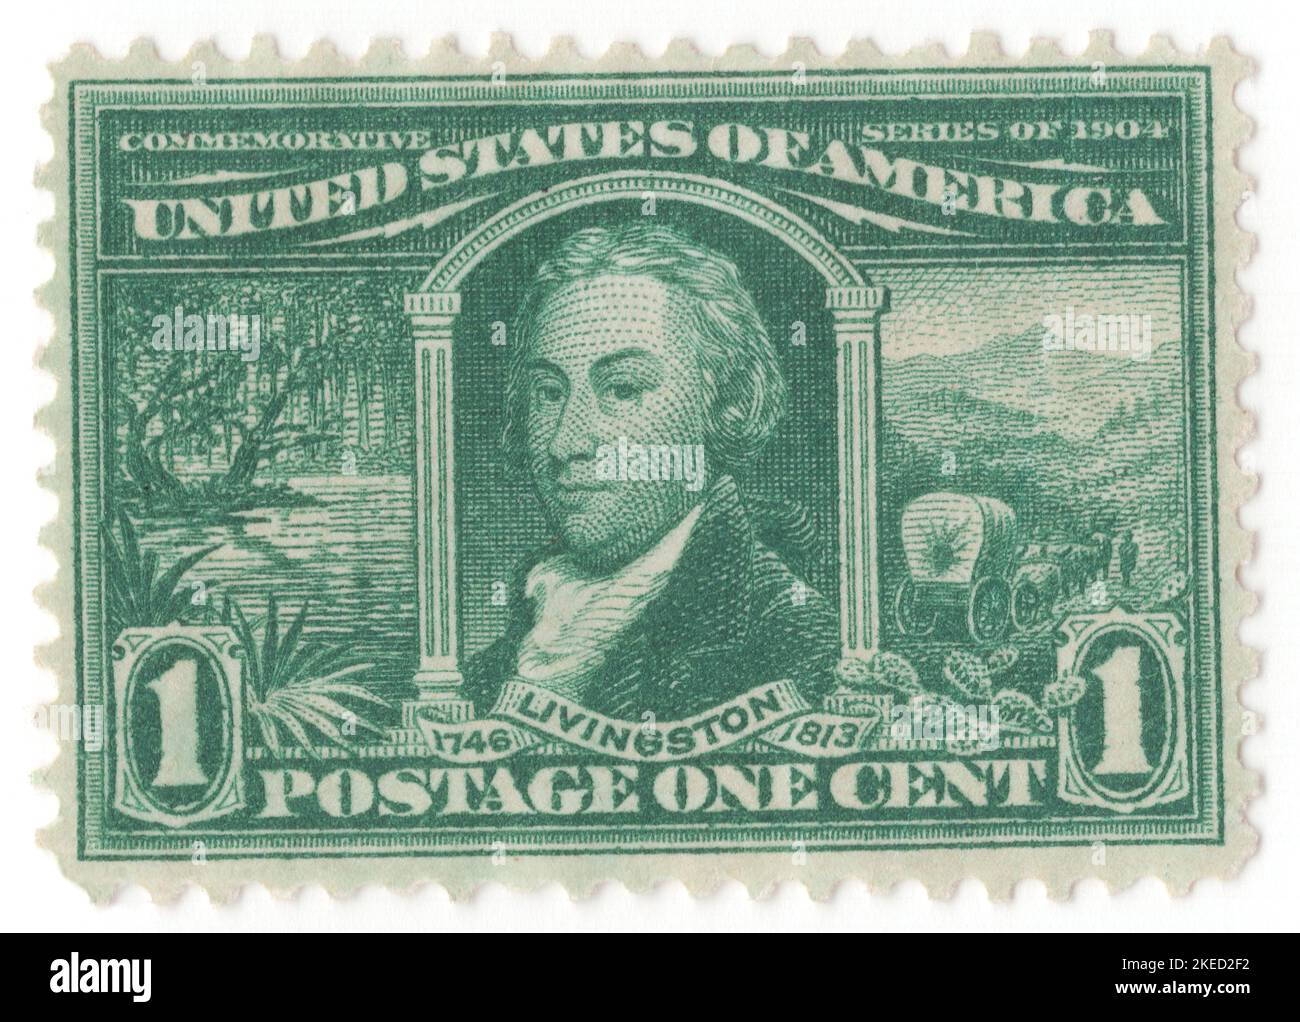 Image of LOUISIANA PURCHASE, 1803 U.S. postage stamp, 1904